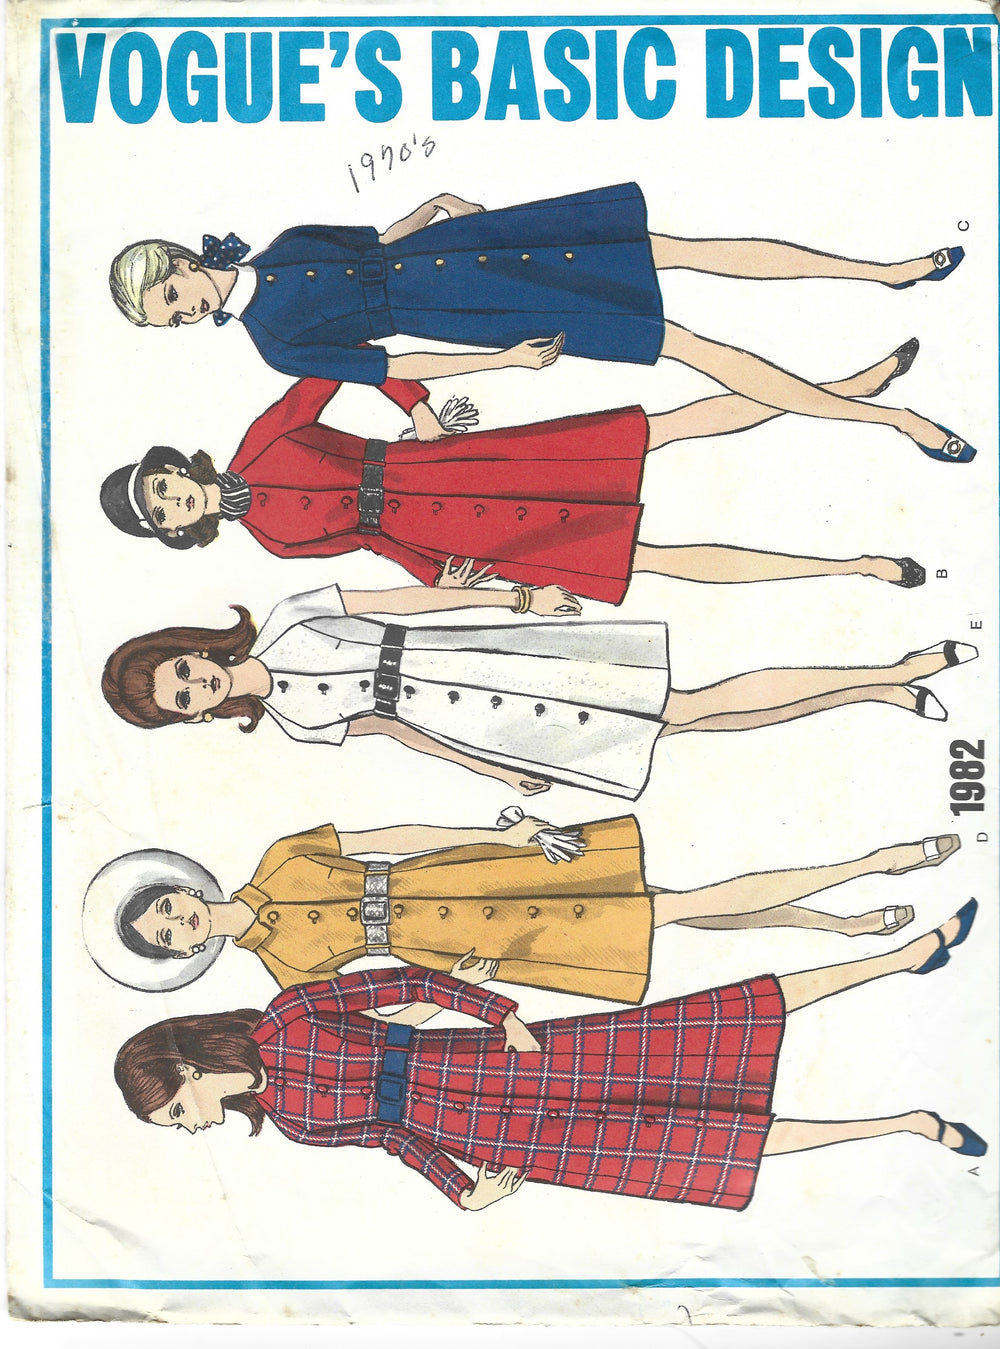 Vogue 1982 Basic Design Ladies Button Front Dress Vintage Sewing Pattern 1960s